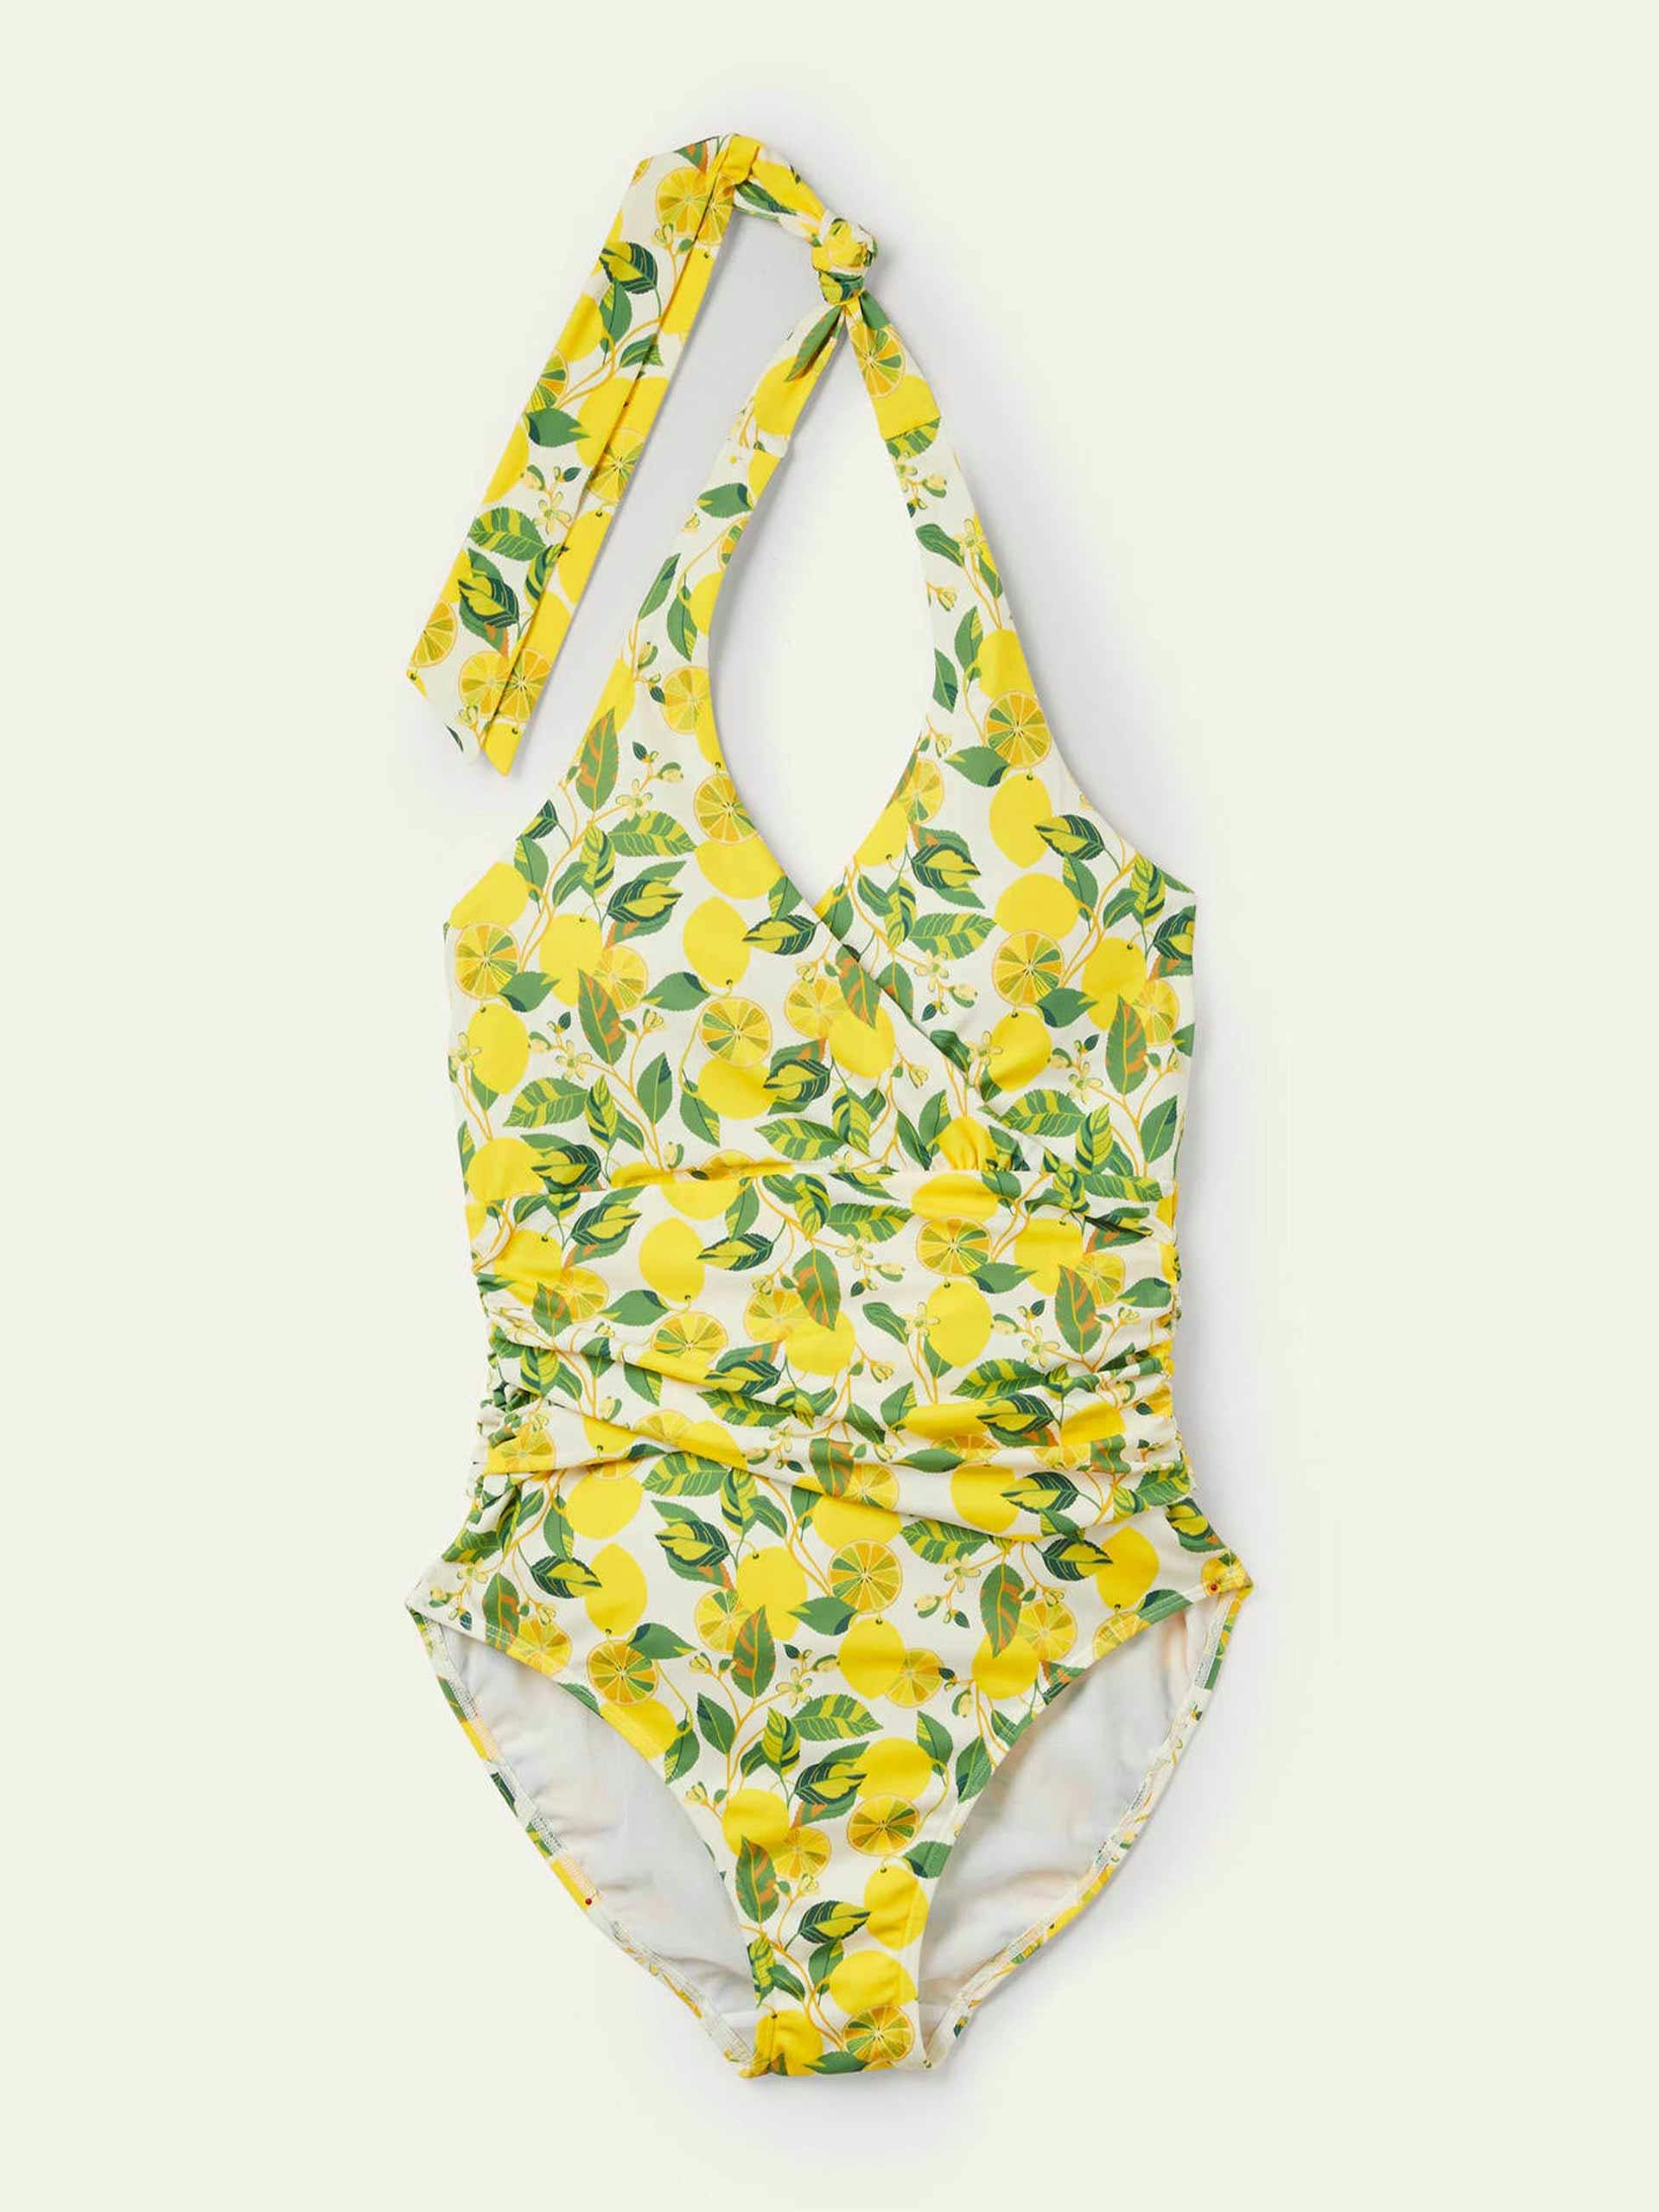 Yellow and green lemon pattern swimsuit